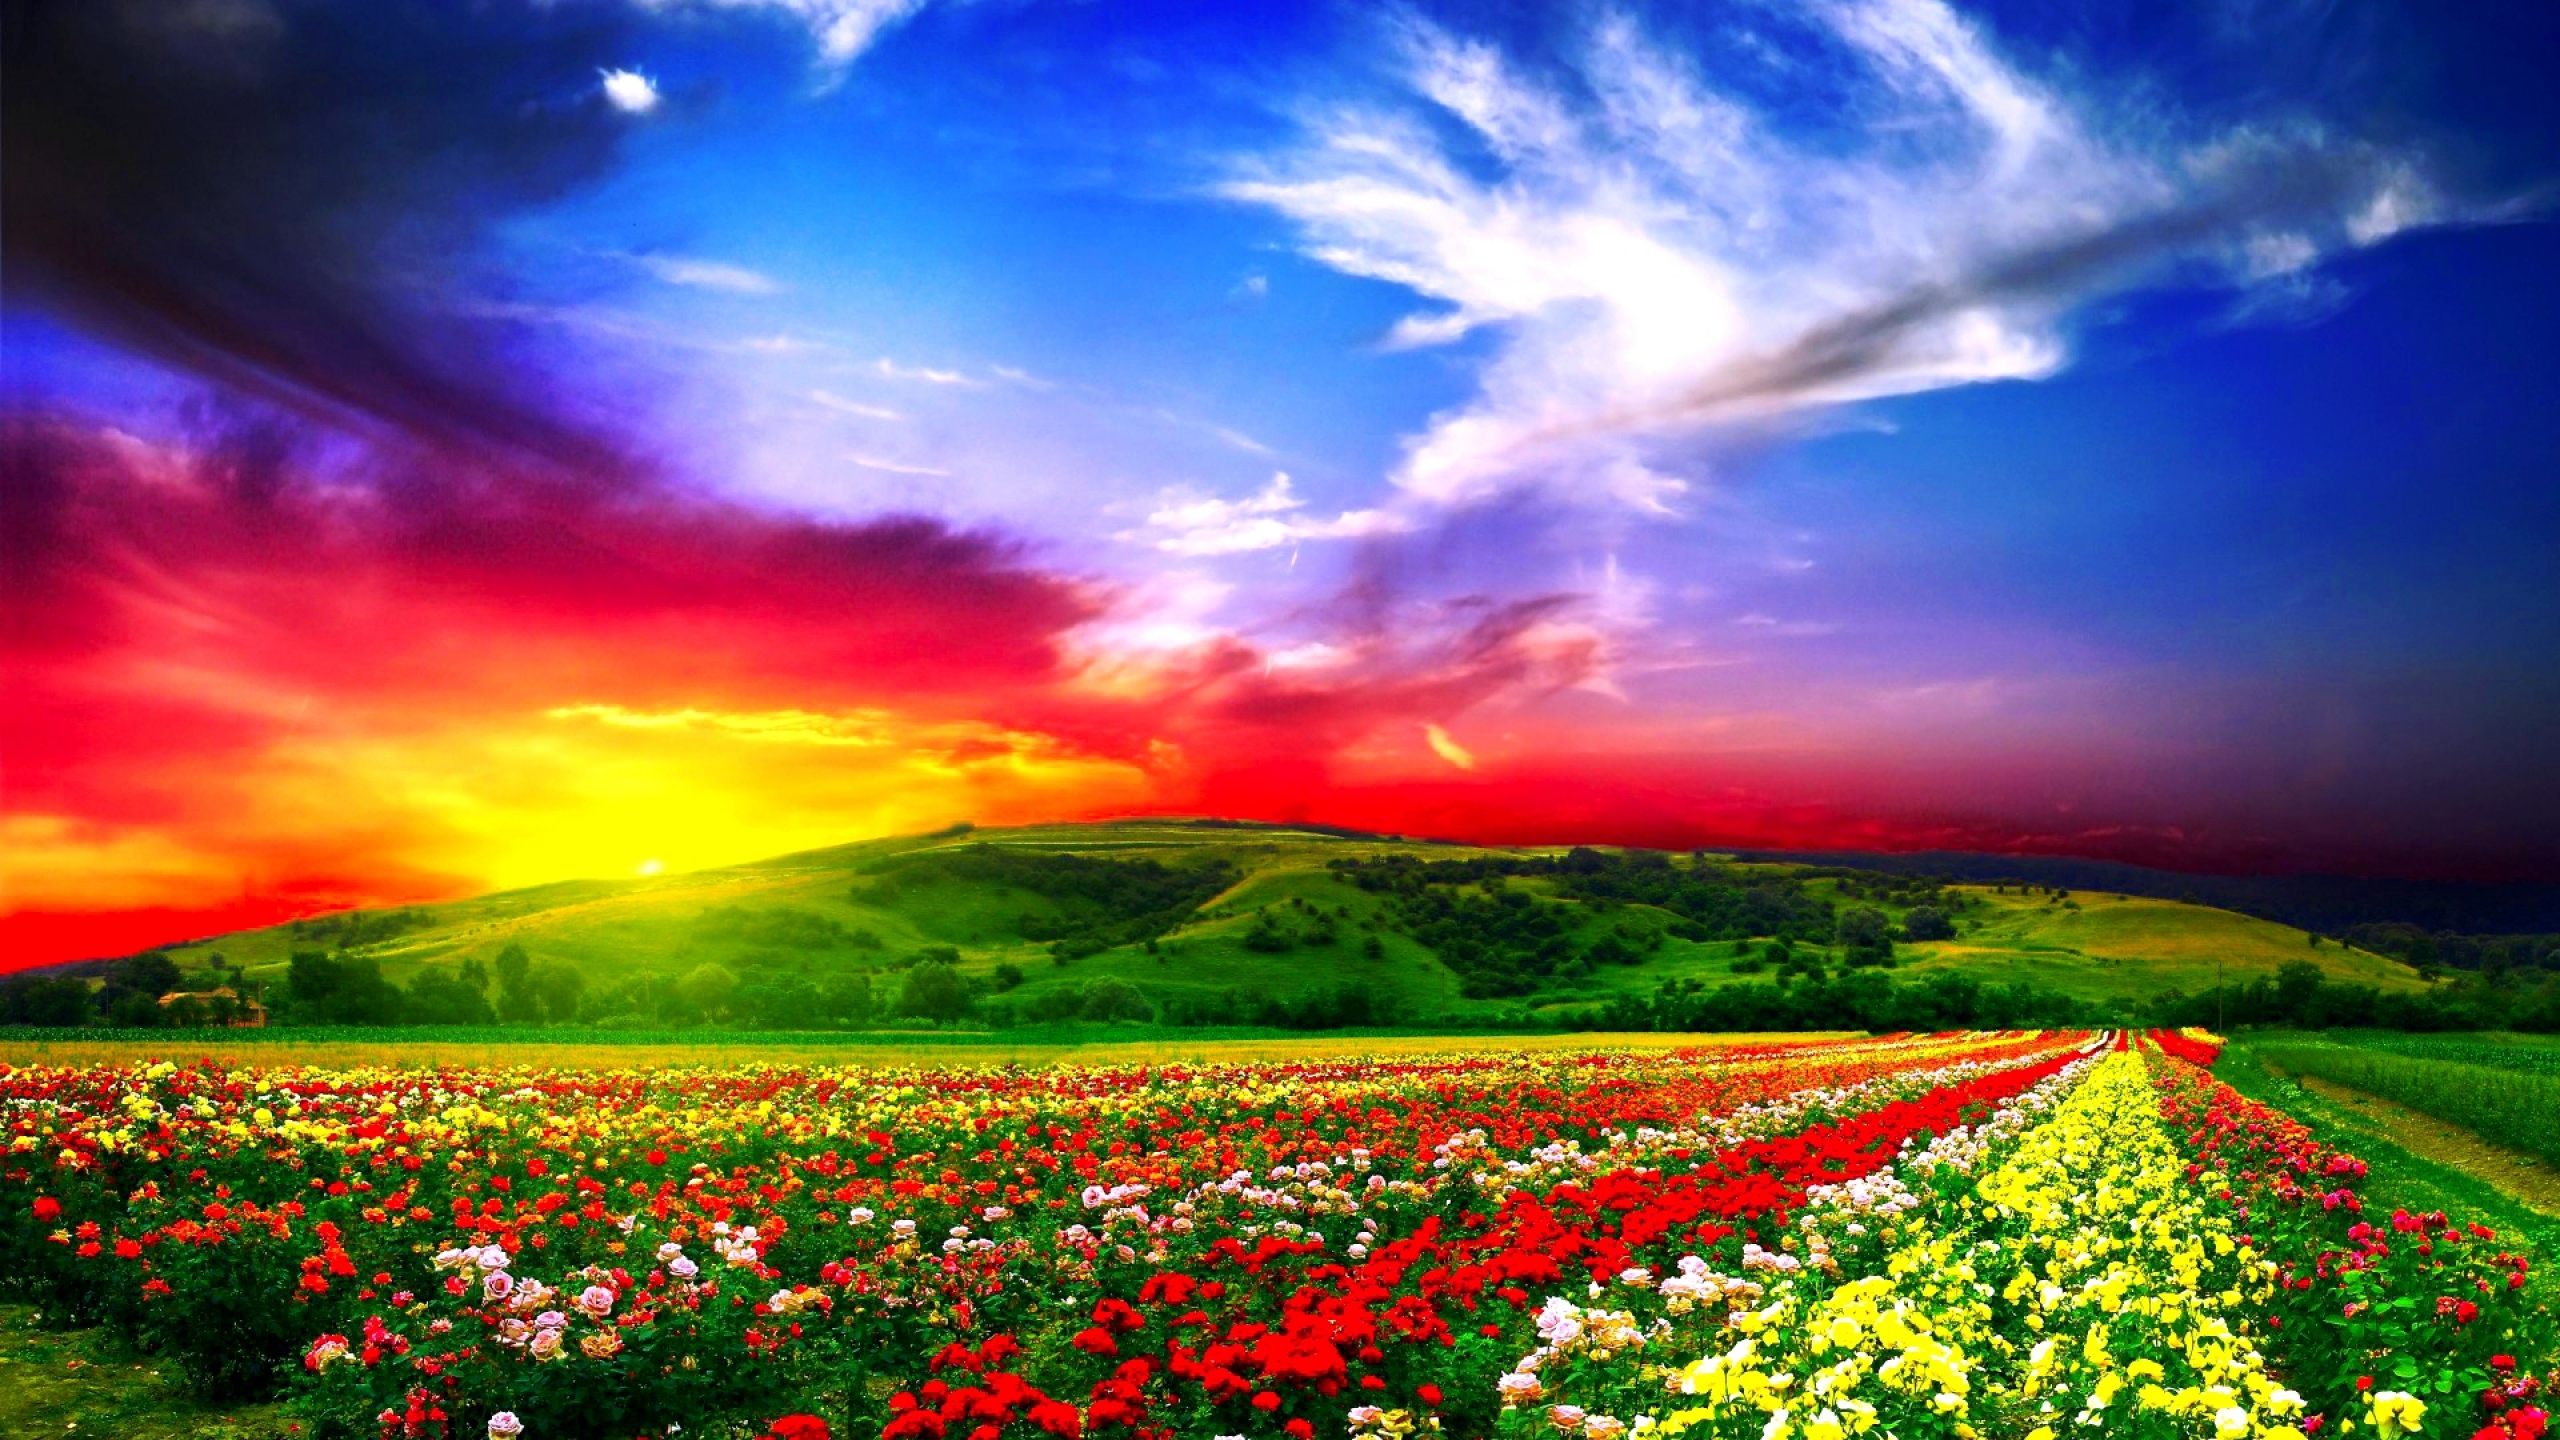 Download Wallpaper 2560x1440 Flowers, Field, Beautiful Mac iMac 27